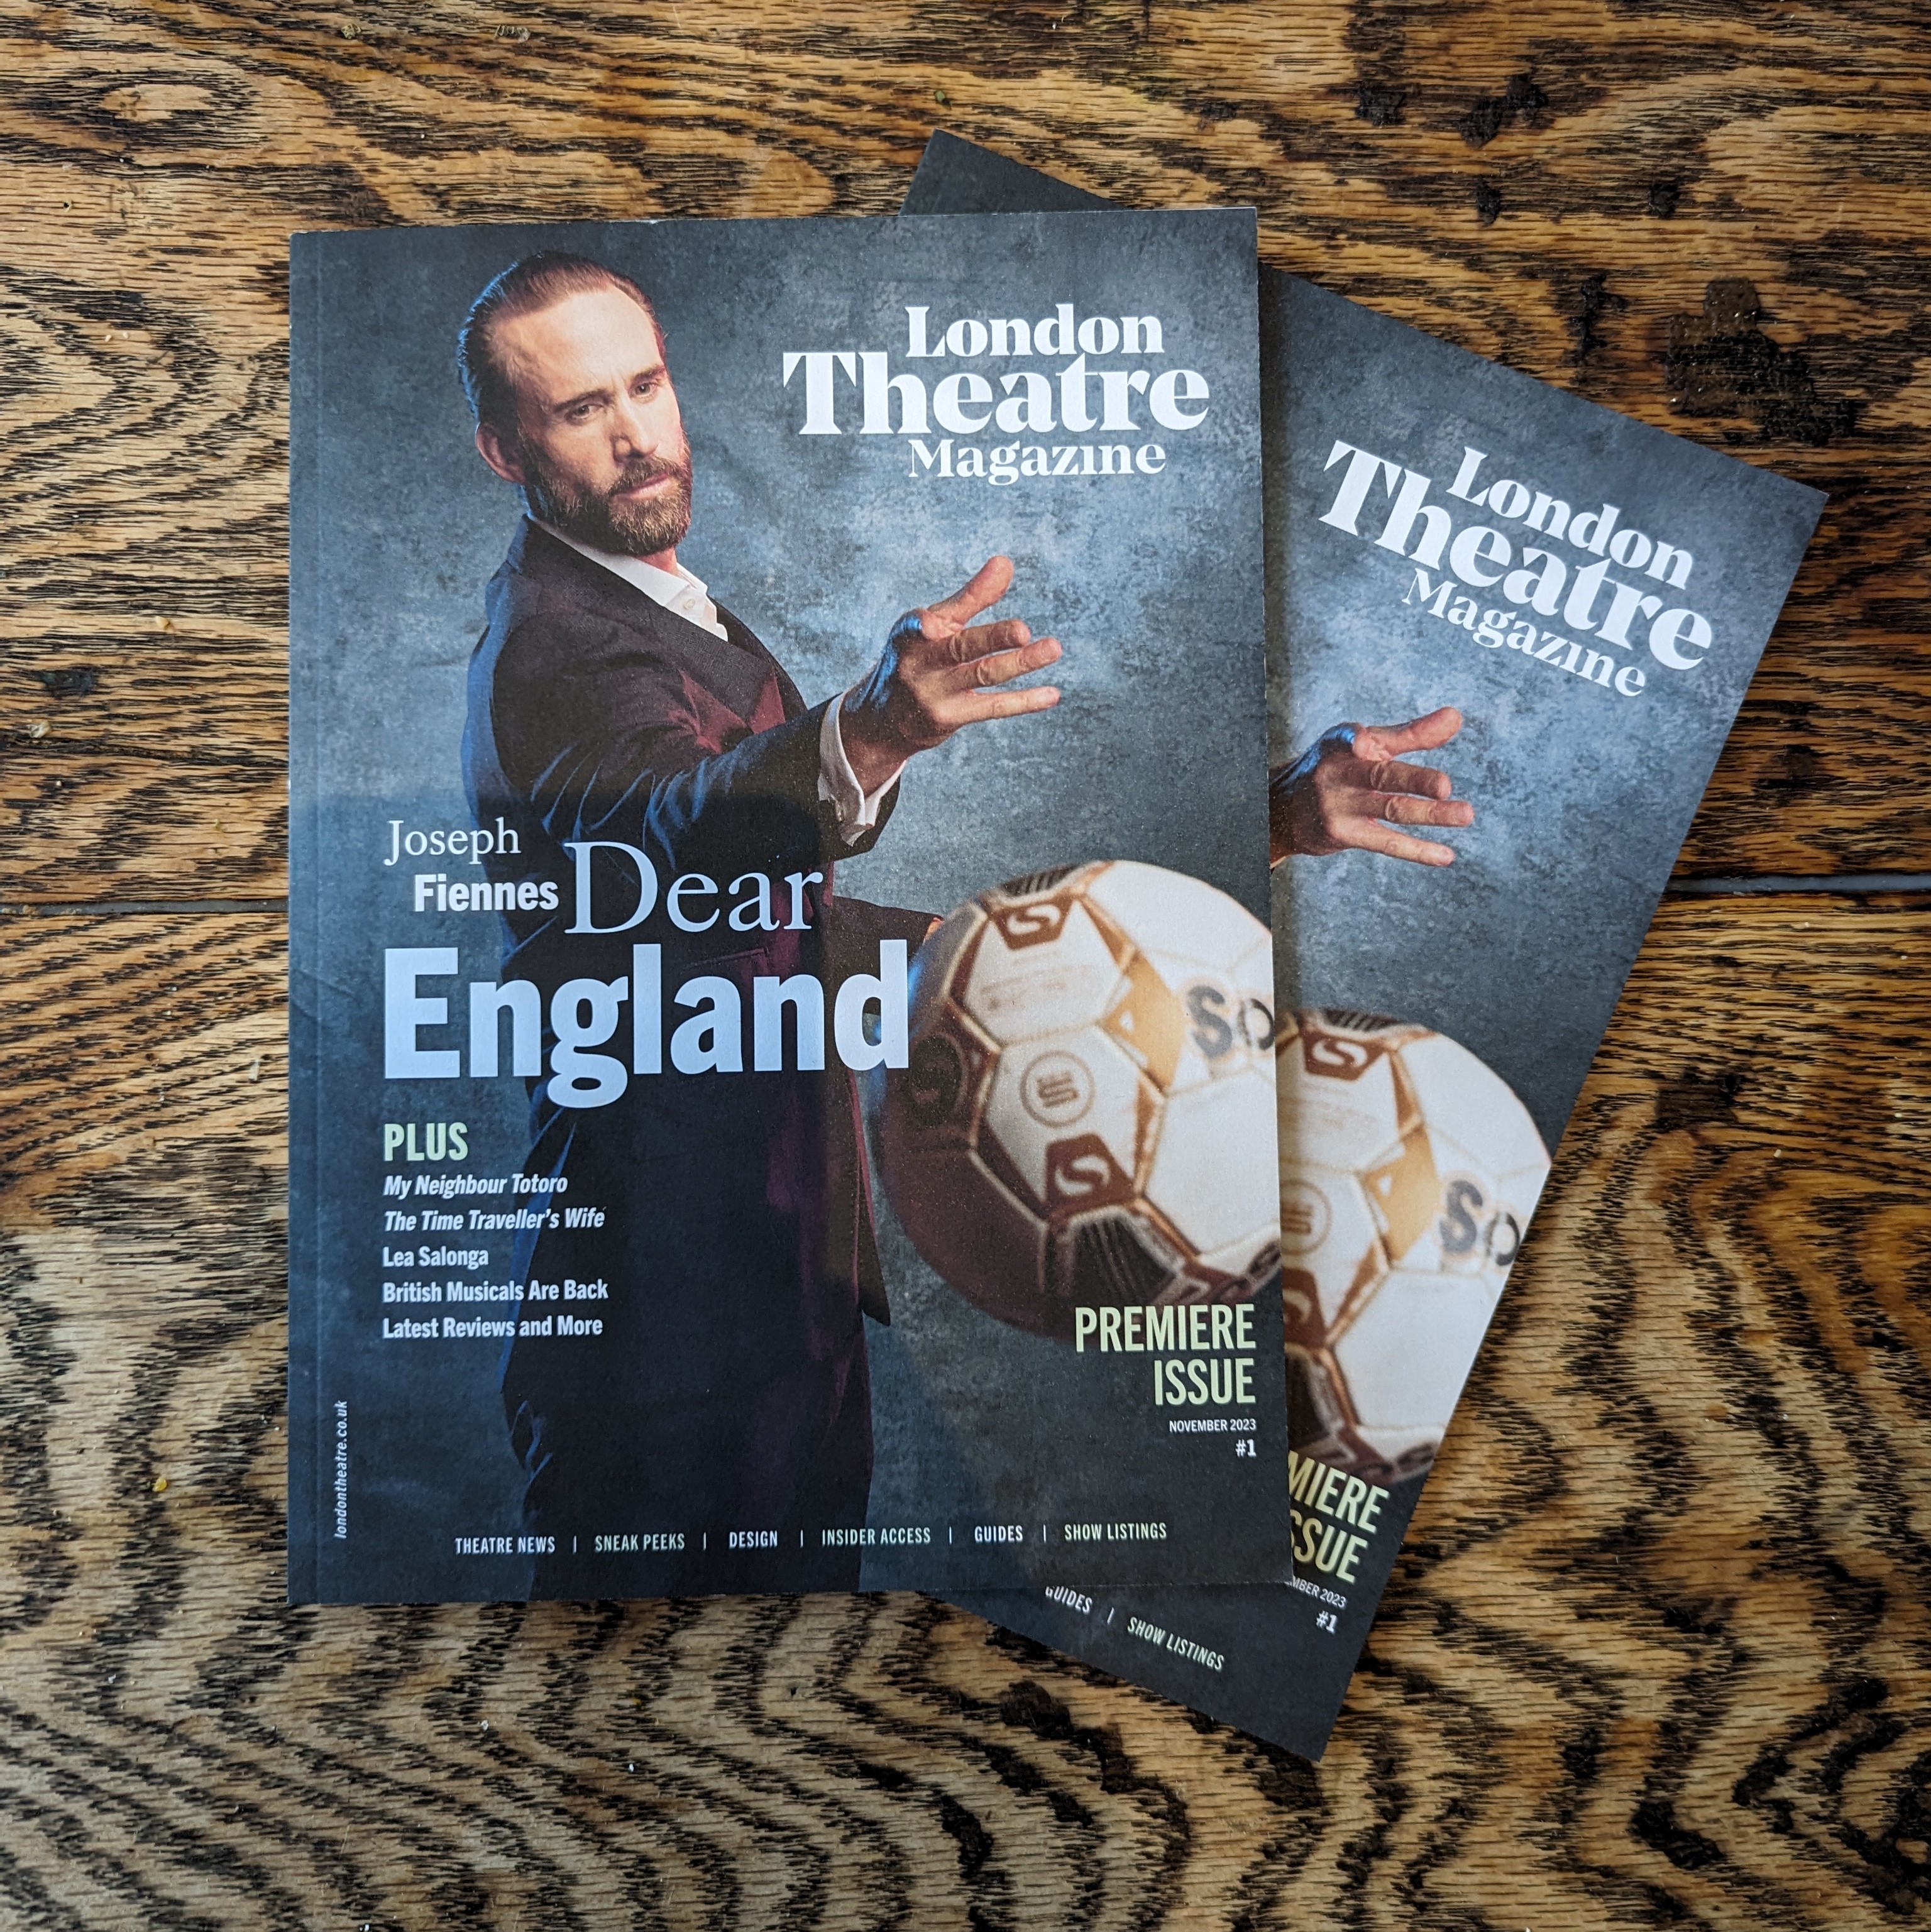 Joseph Fiennes & the cast of Dear England for London Theatre Magazine